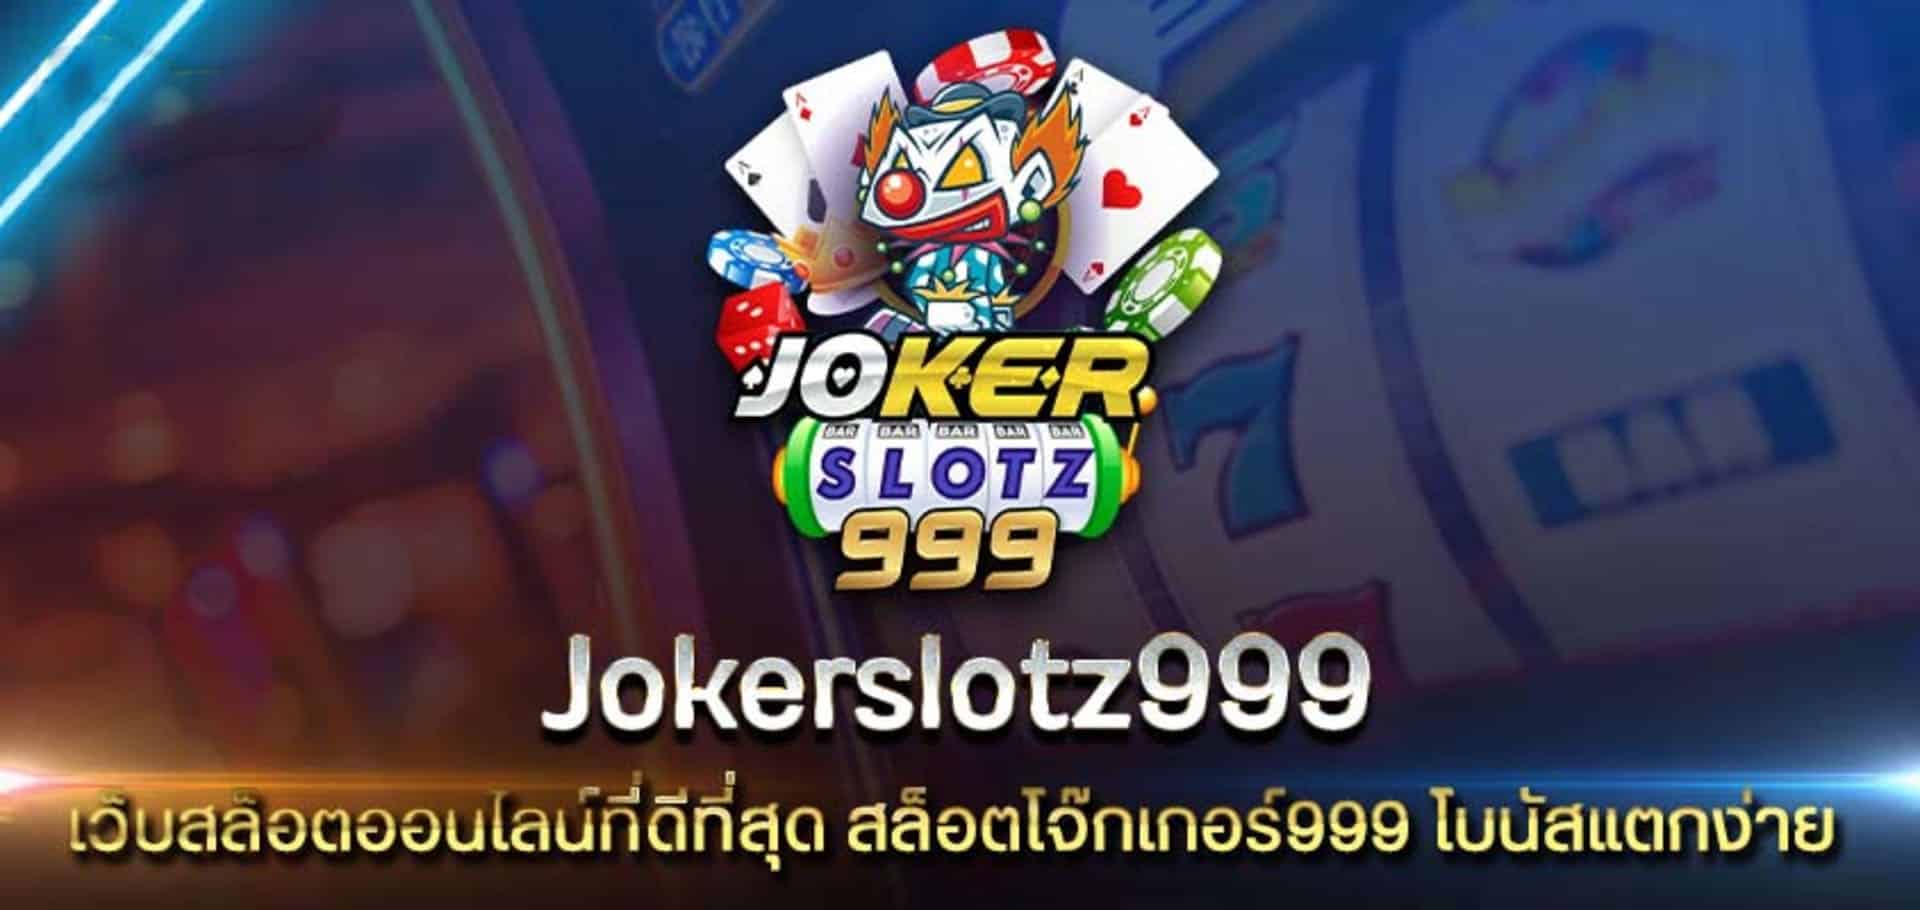 jokerslotz999